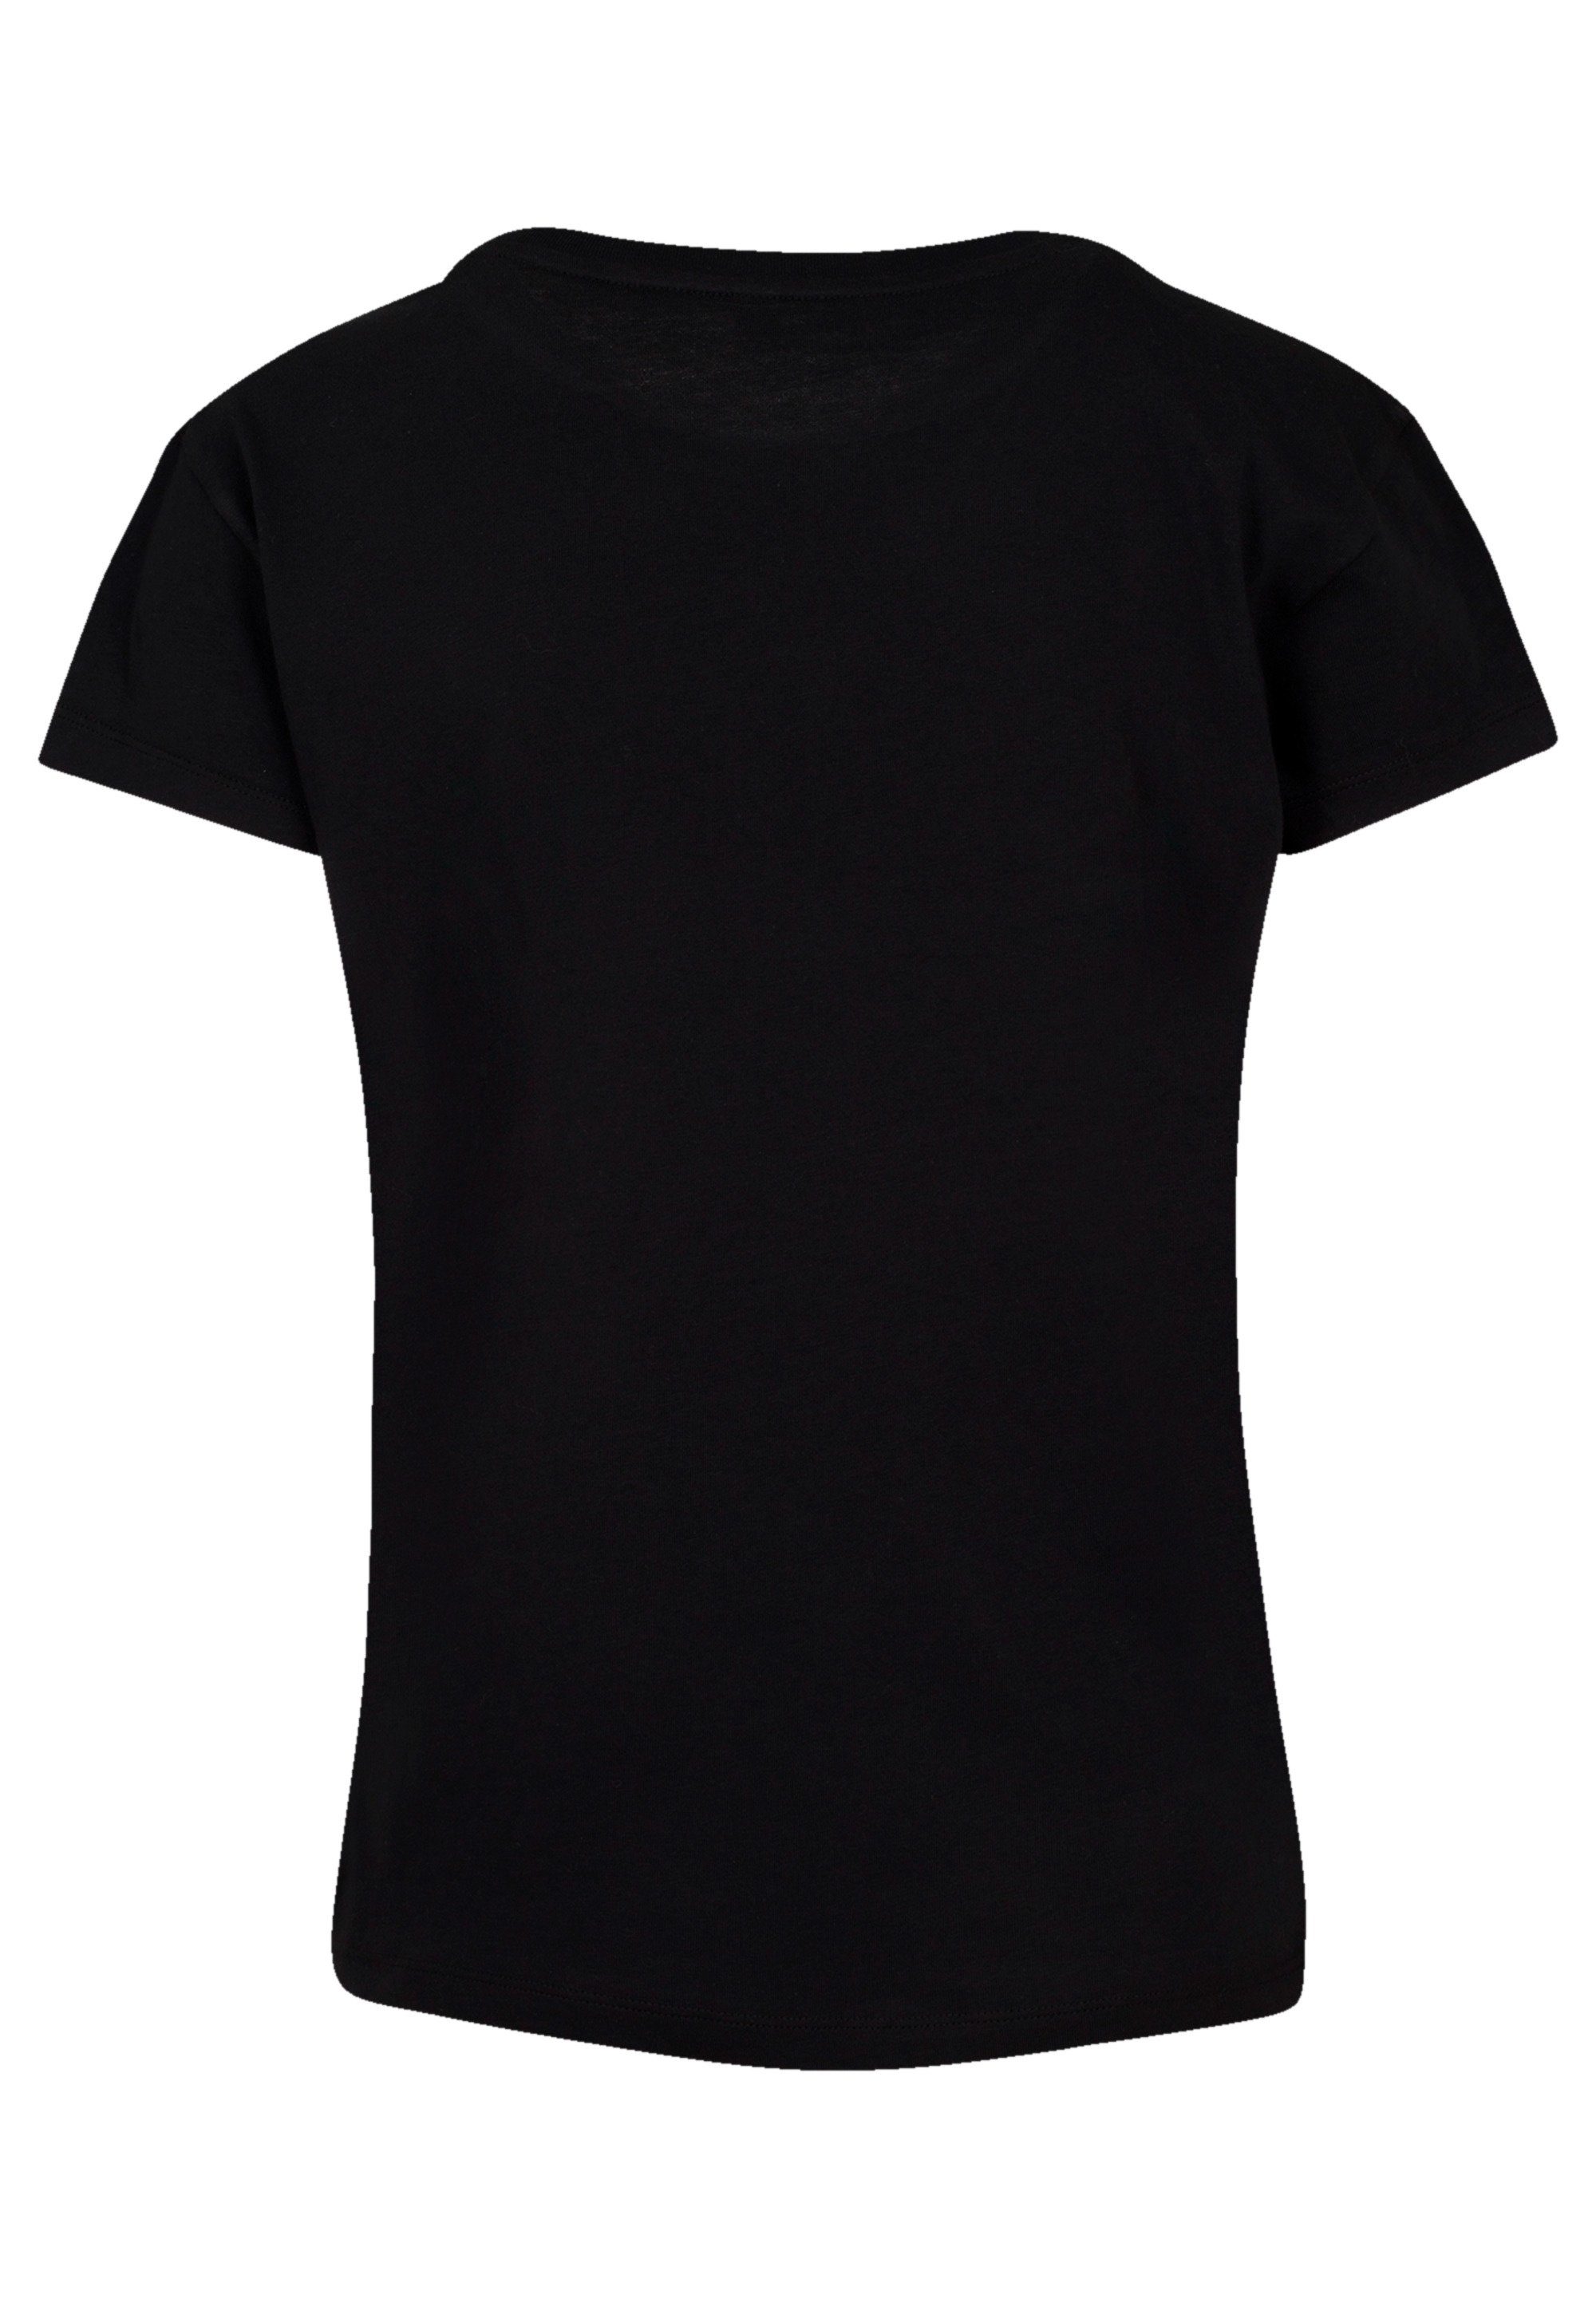 T-Shirt Namaste Skelett Halloween Yoga Basic F4NT4STIC Print, Vielseitiges minimalistischem Design mit